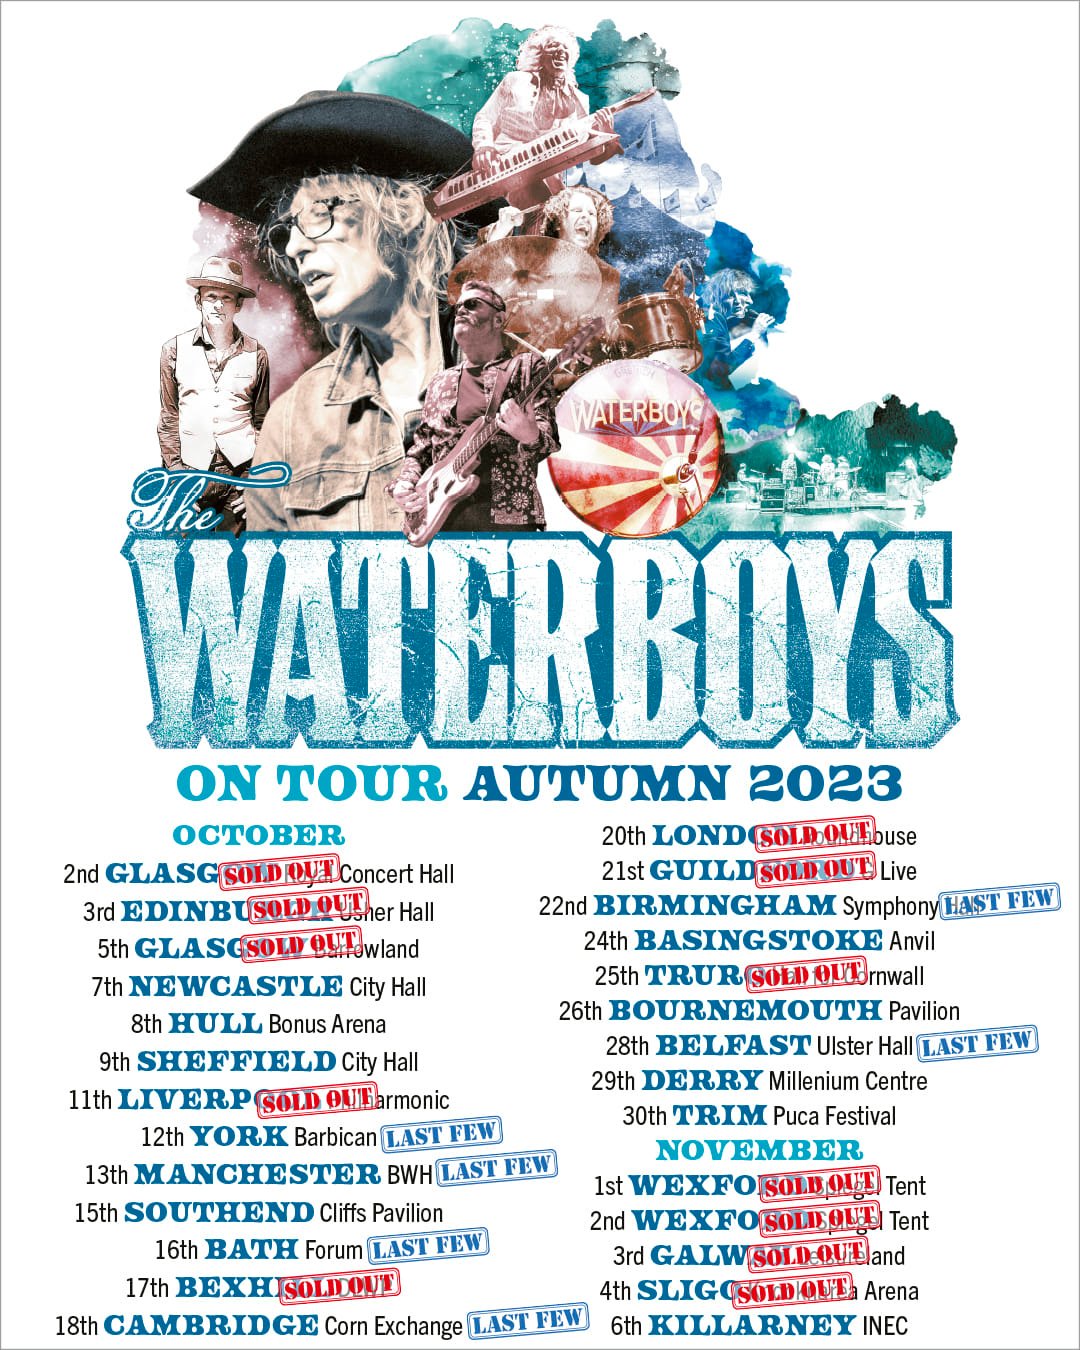 wbs_on_tour_poster_uk_ireland_2023.jpg